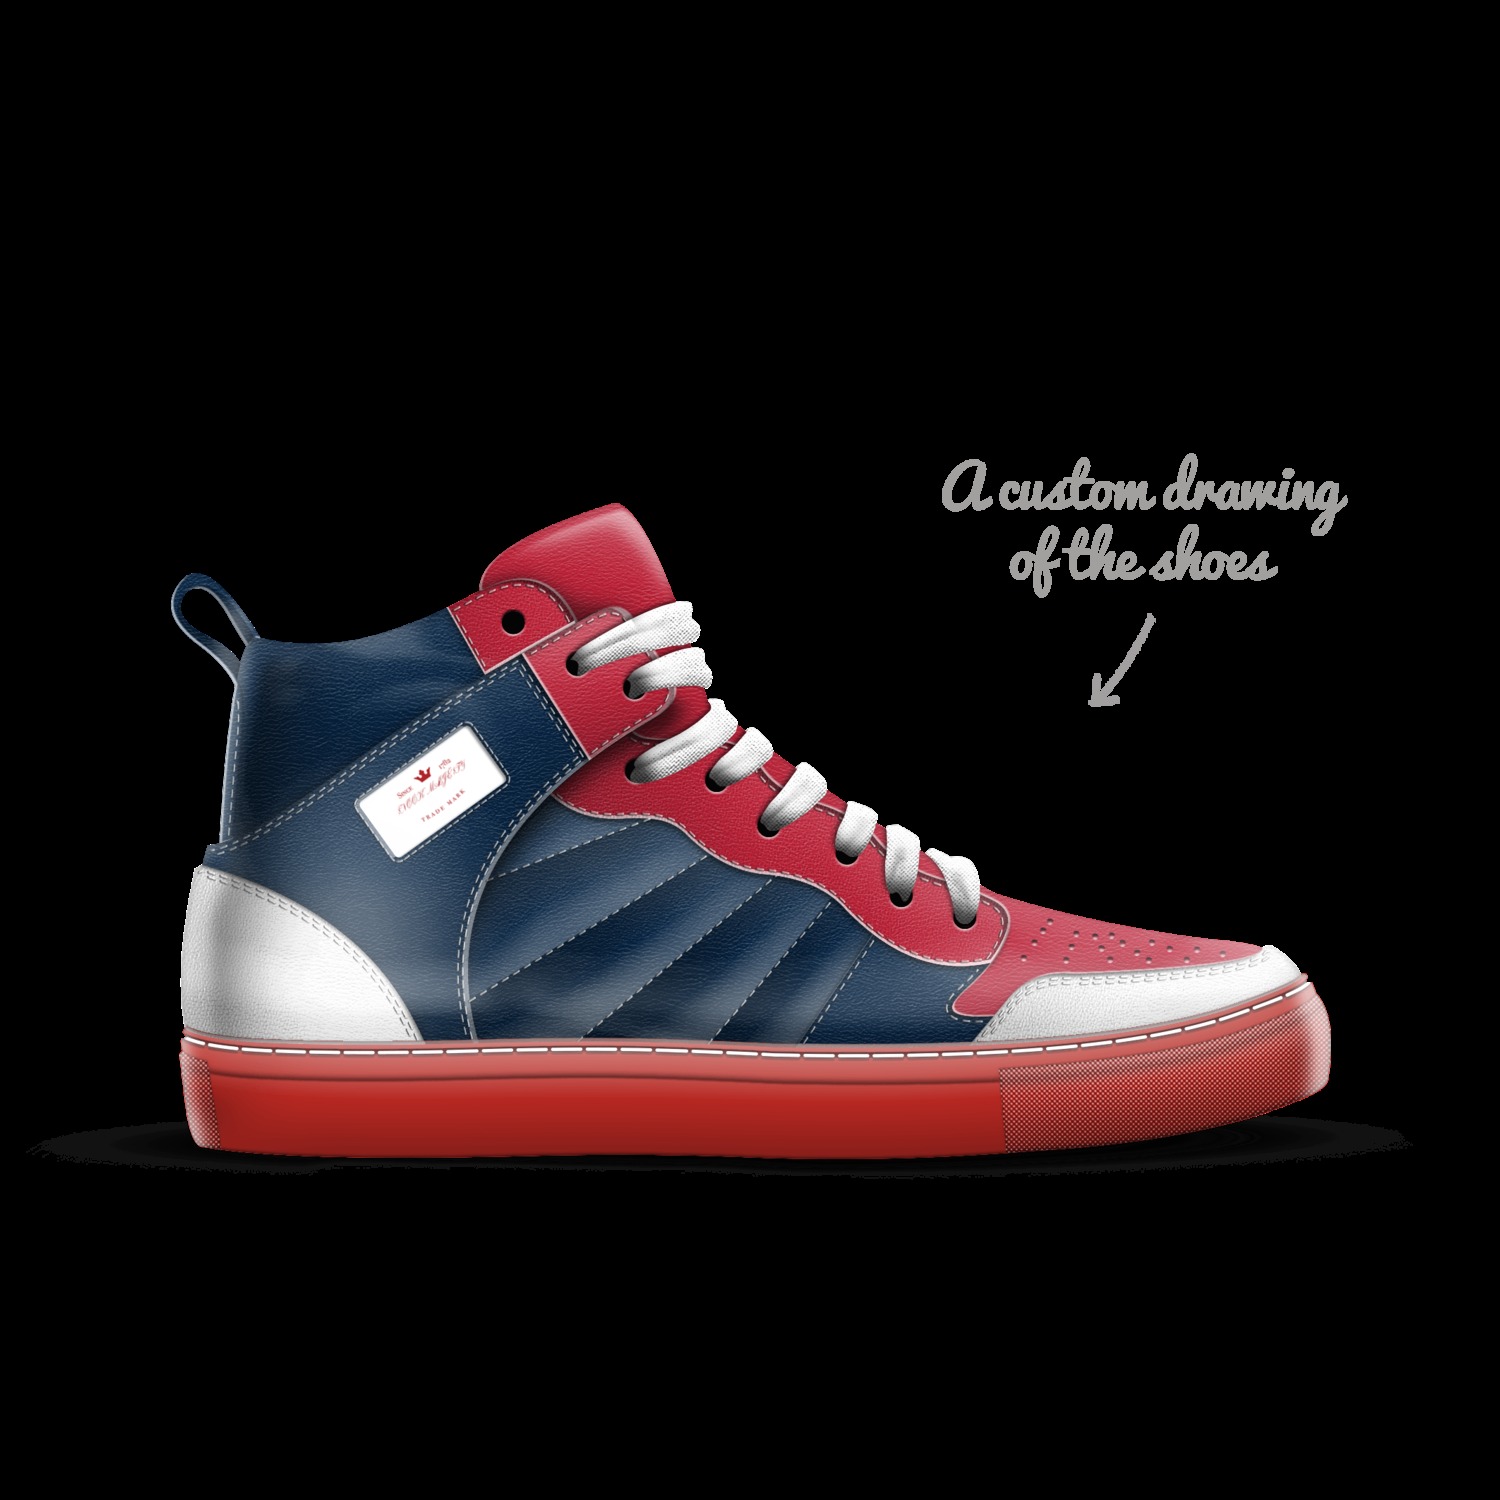 Snook majesty | A Custom Shoe concept 